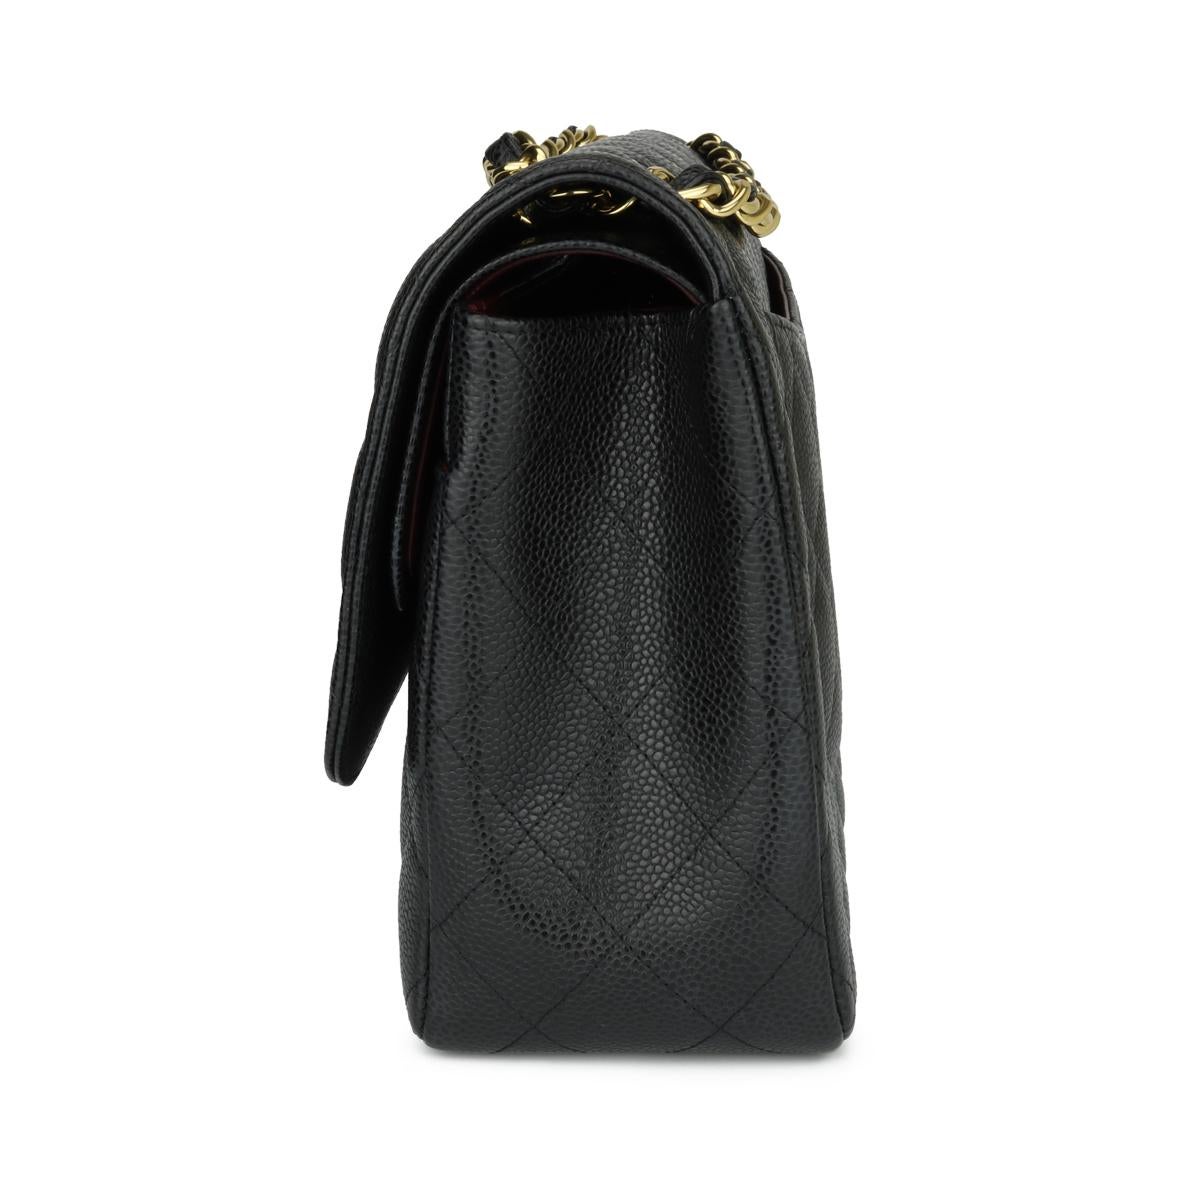 CHANEL Double Flap Jumbo Bag Black Caviar with Gold Hardware 2015 1